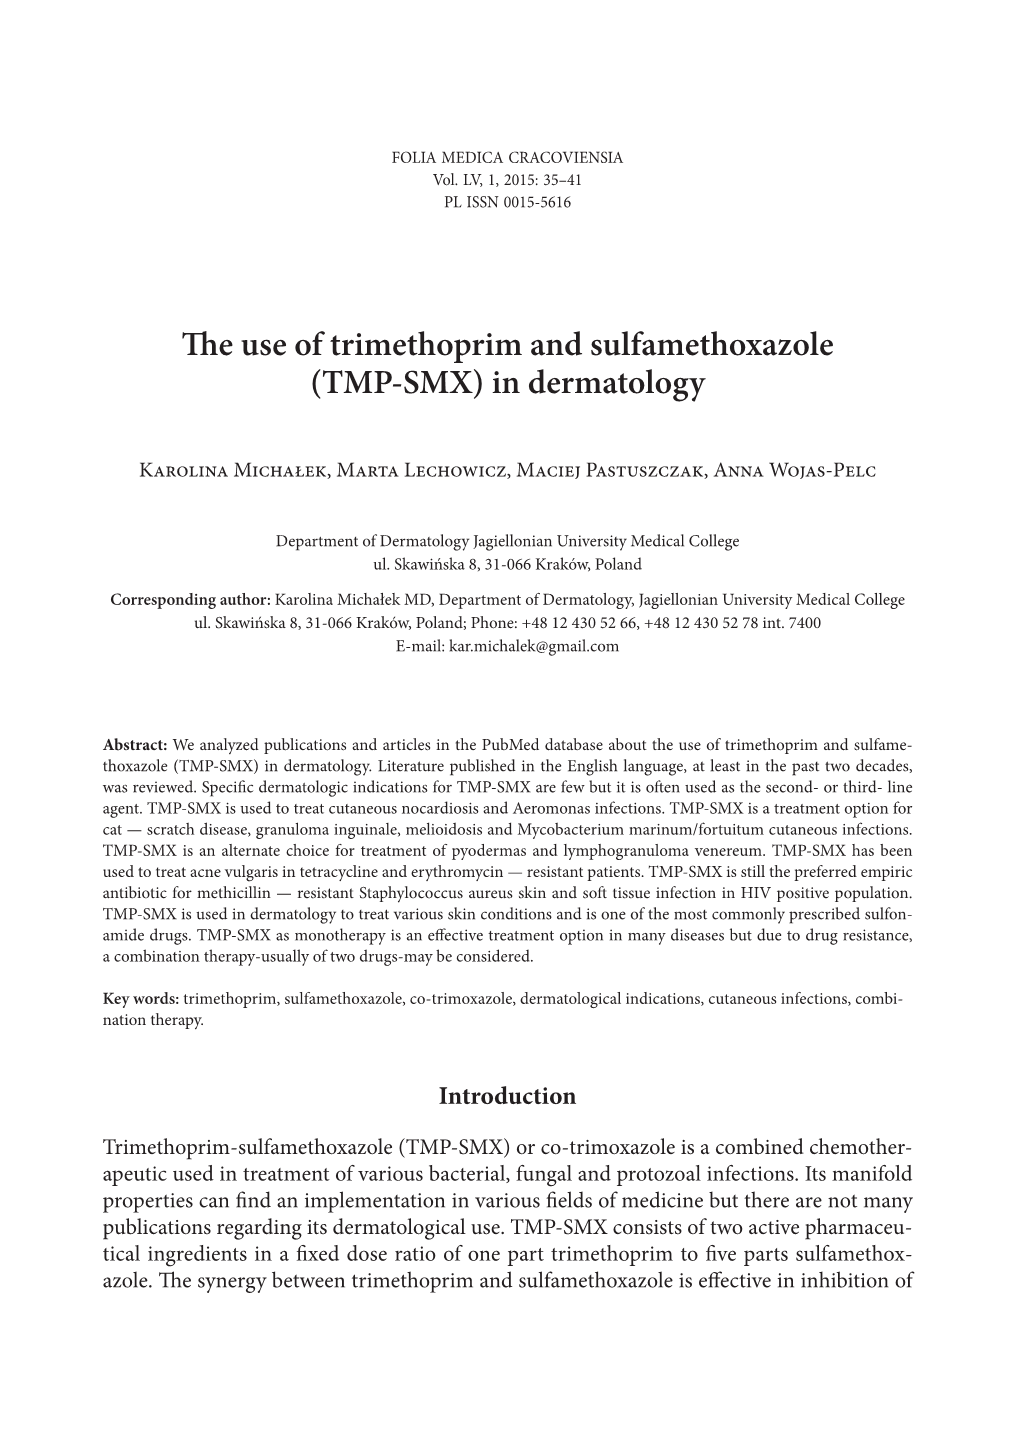 The Use of Trimethoprim and Sulfamethoxazole (TMP-SMX) in Dermatology